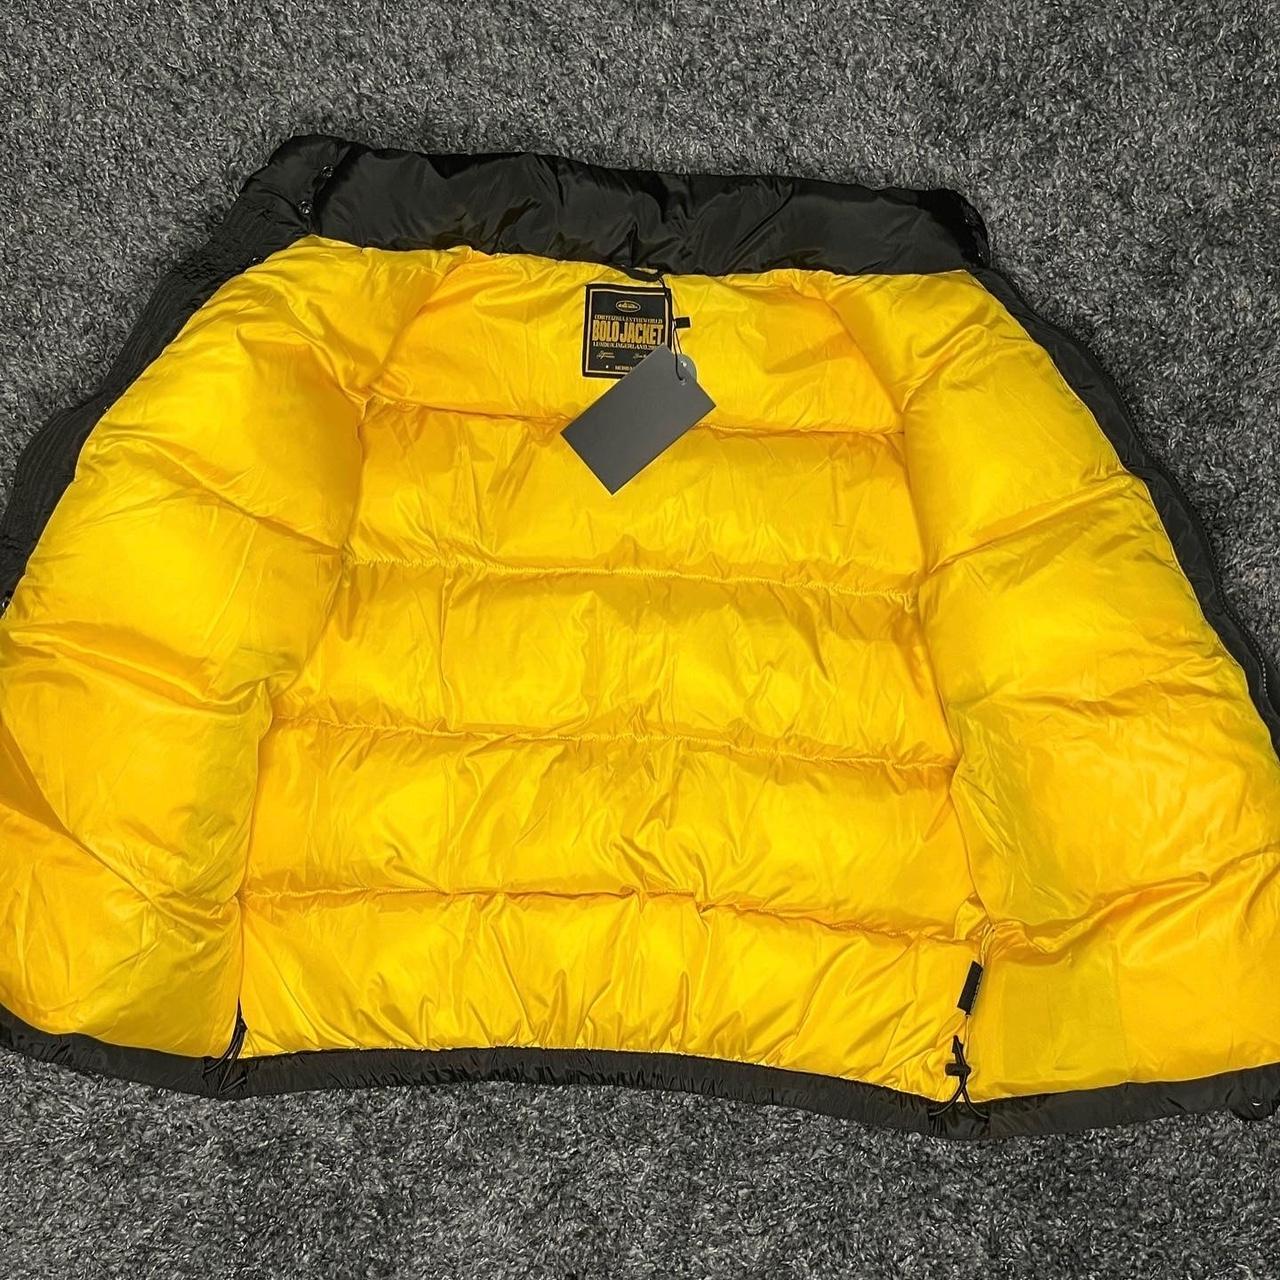 Corteiz Bolo Jacket Black / Yellow Size Medium Can... - Depop